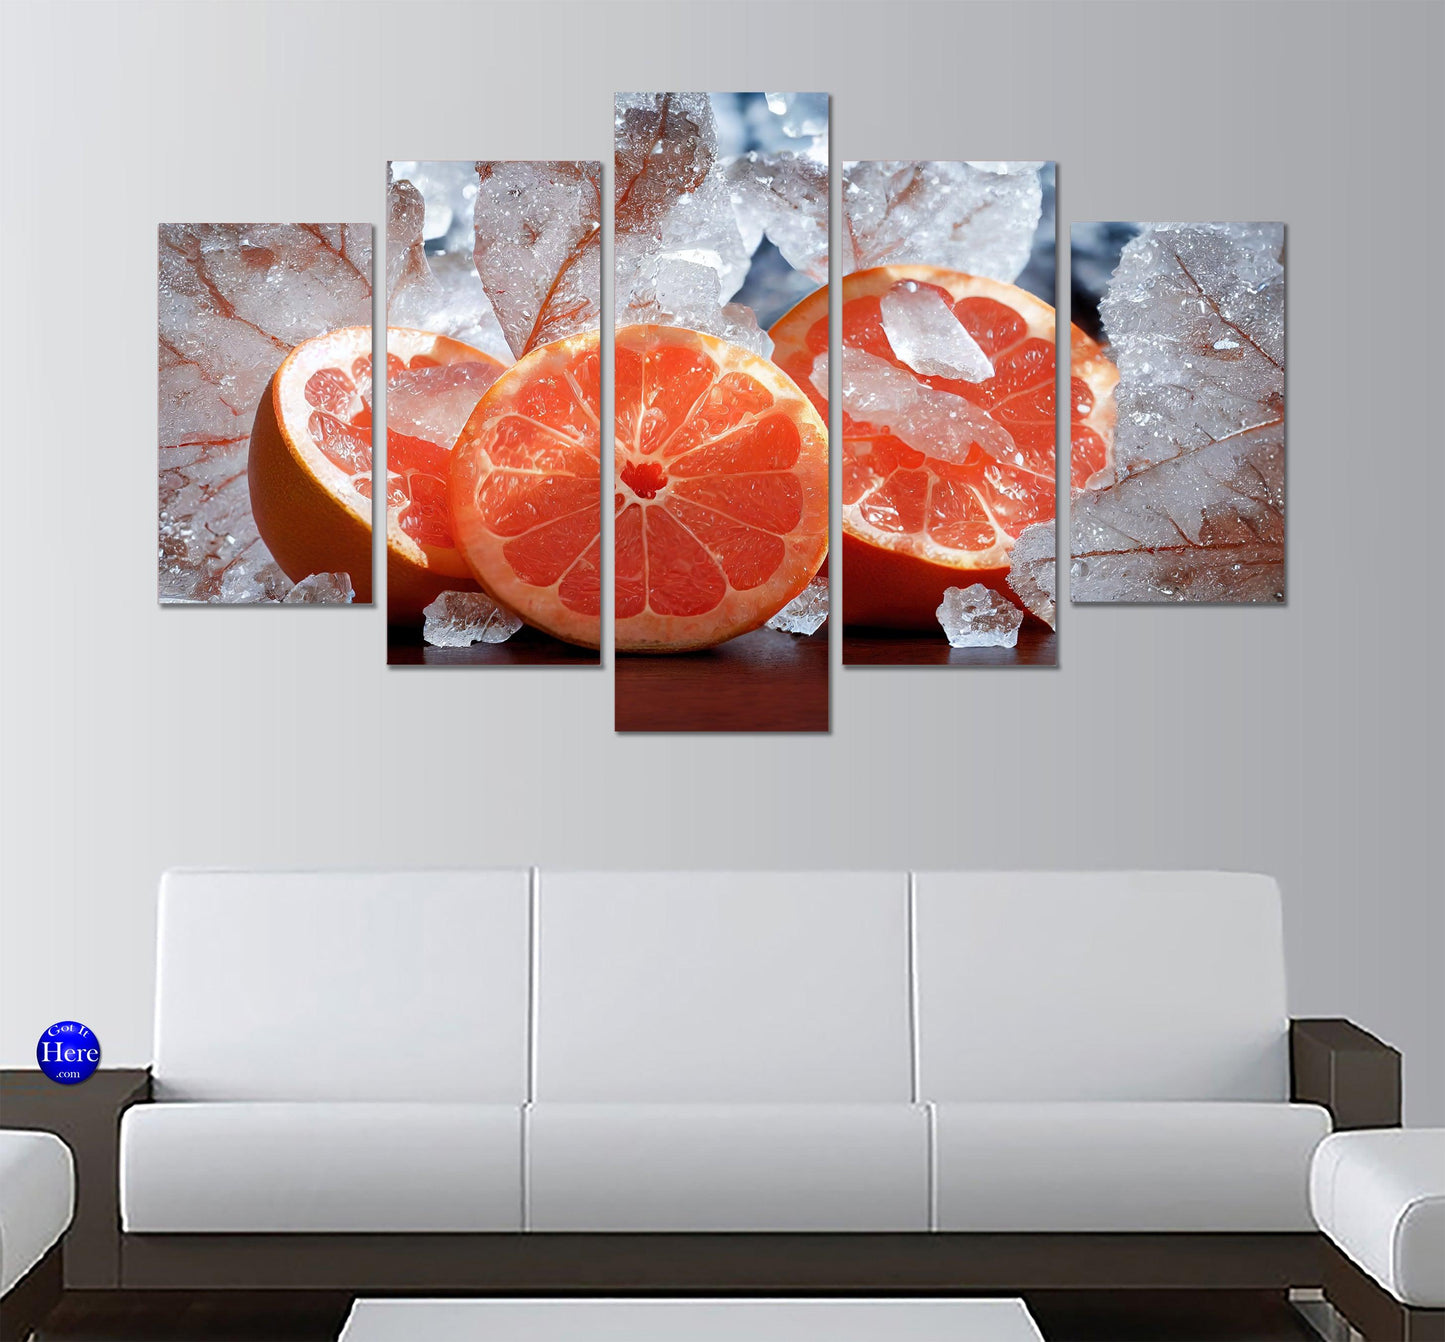 Orange Slices On Ice 5 Panel Canvas Print Wall Art - GotItHere.com